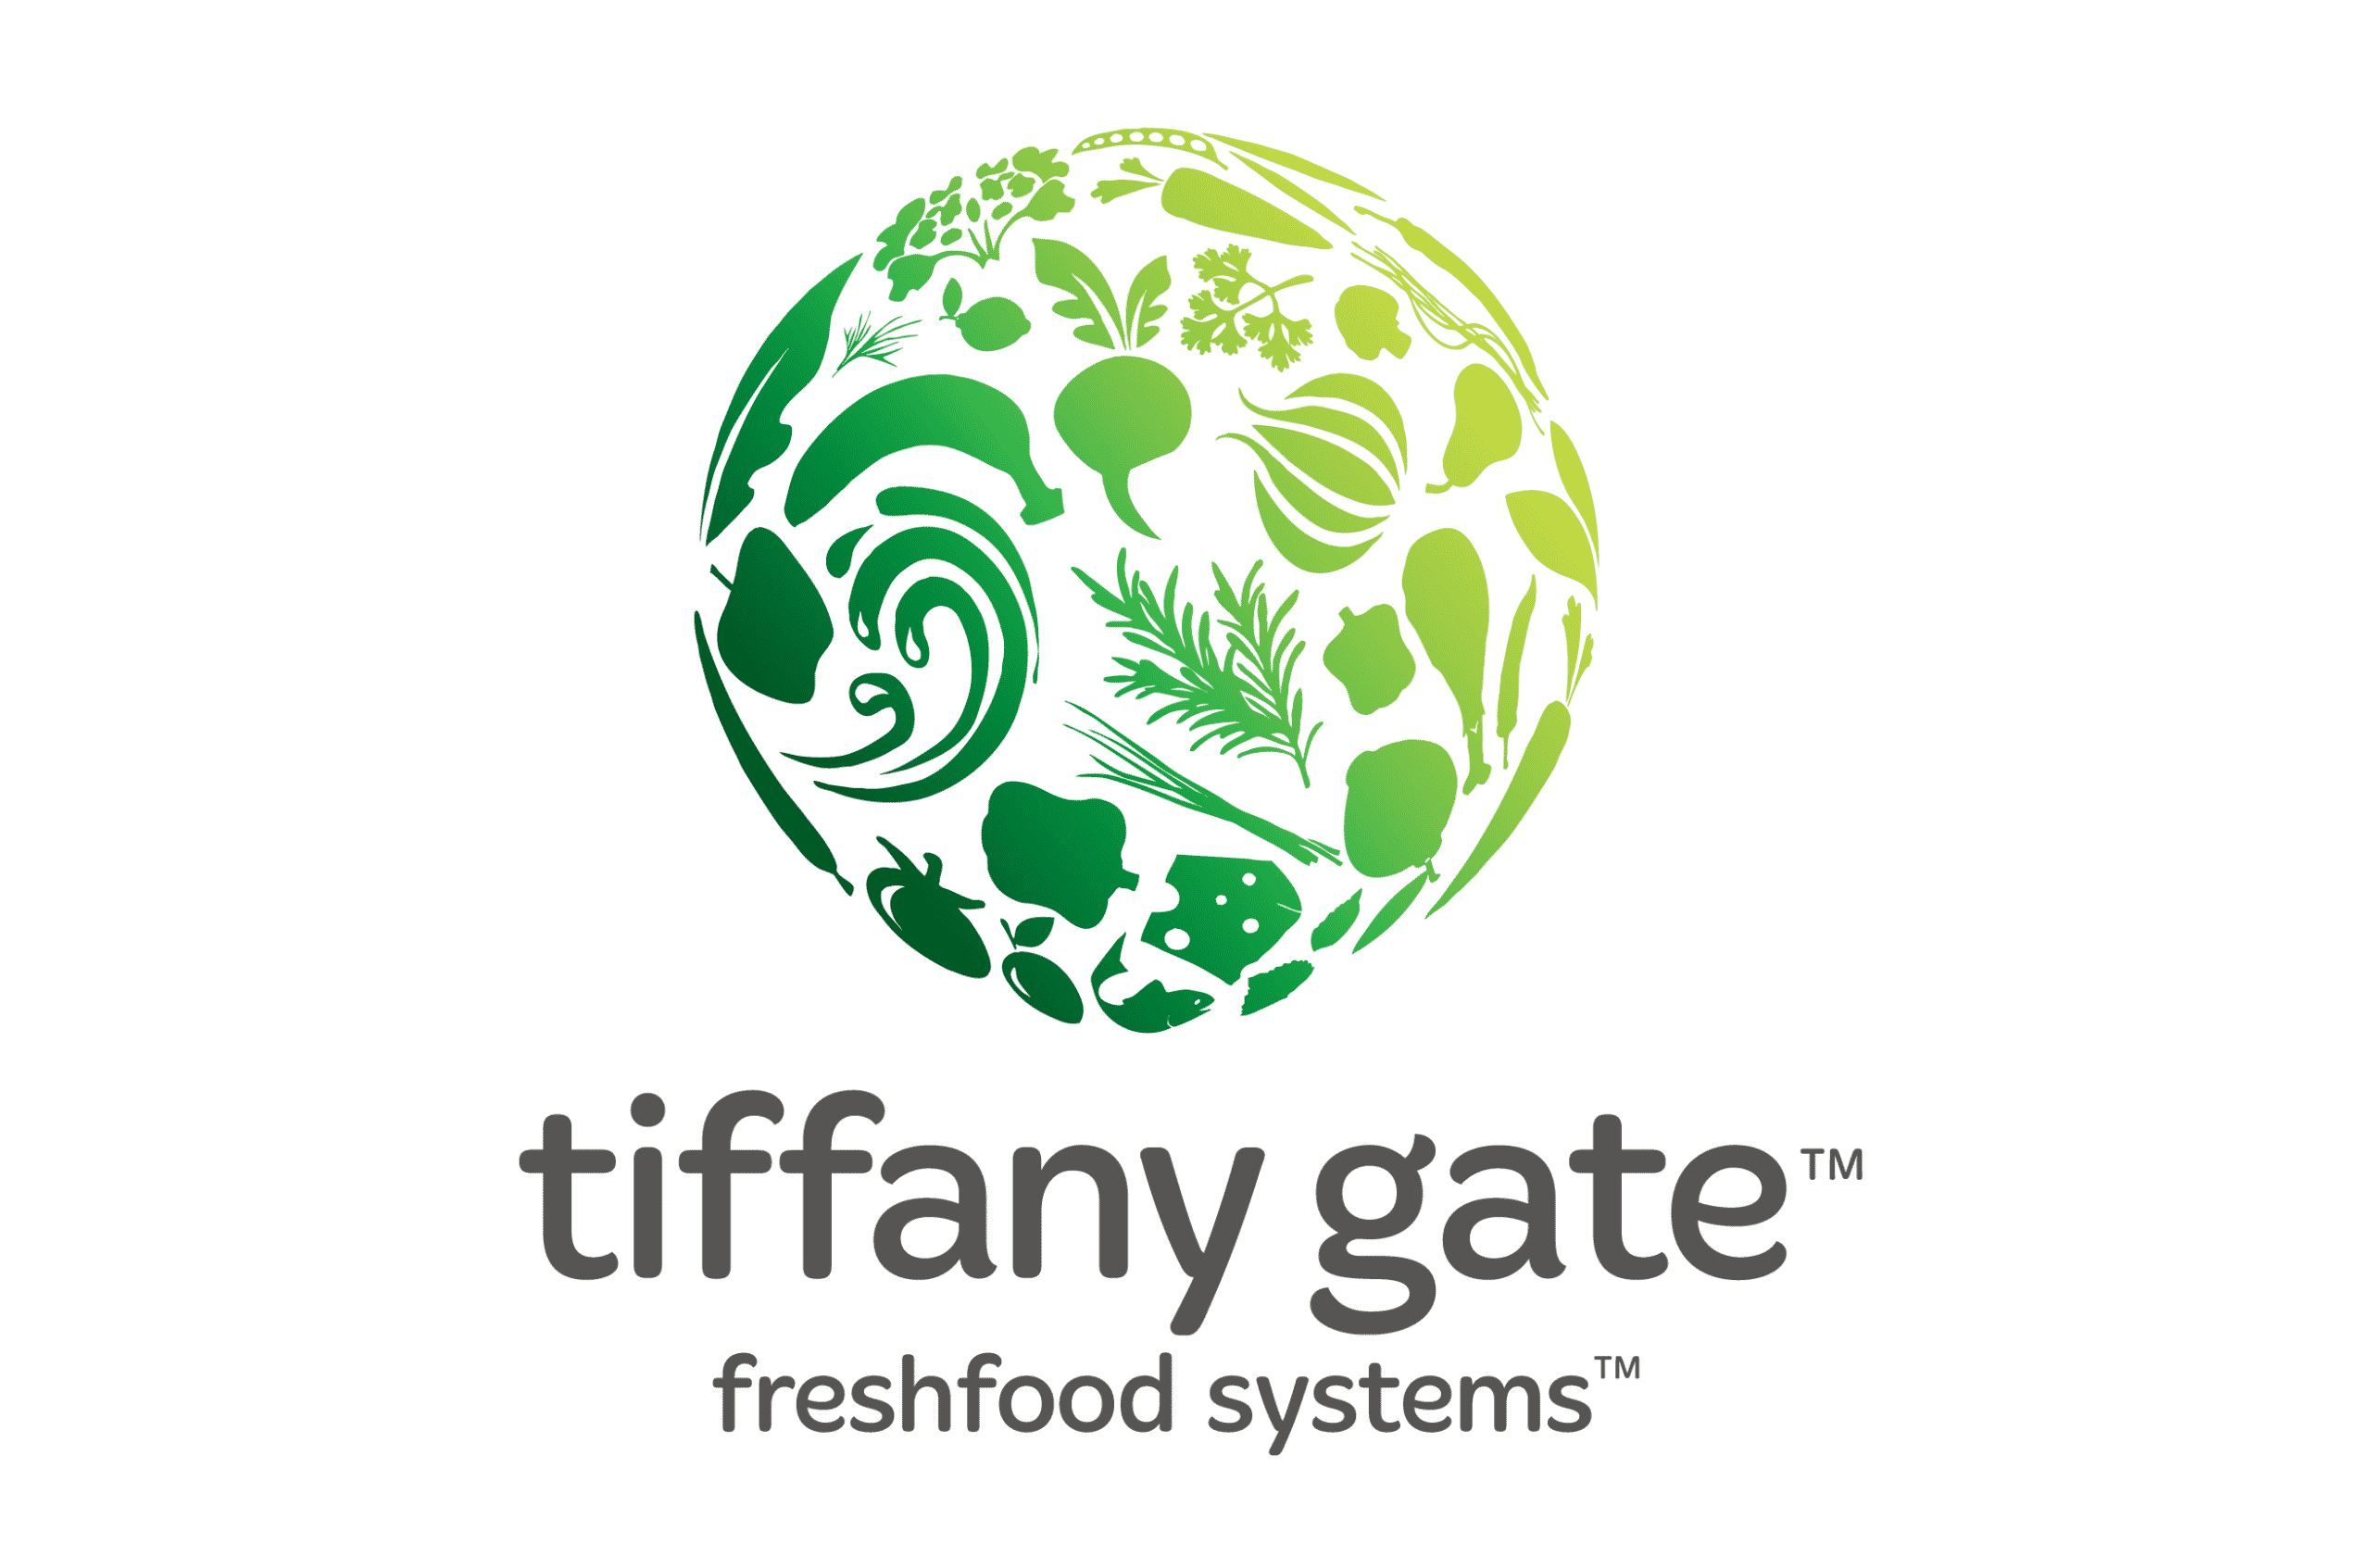 Tiffany Gate fresh food systems logo. World made up of fresh food, Dark green to yellow gradient. Grey Tiffany Gate text.